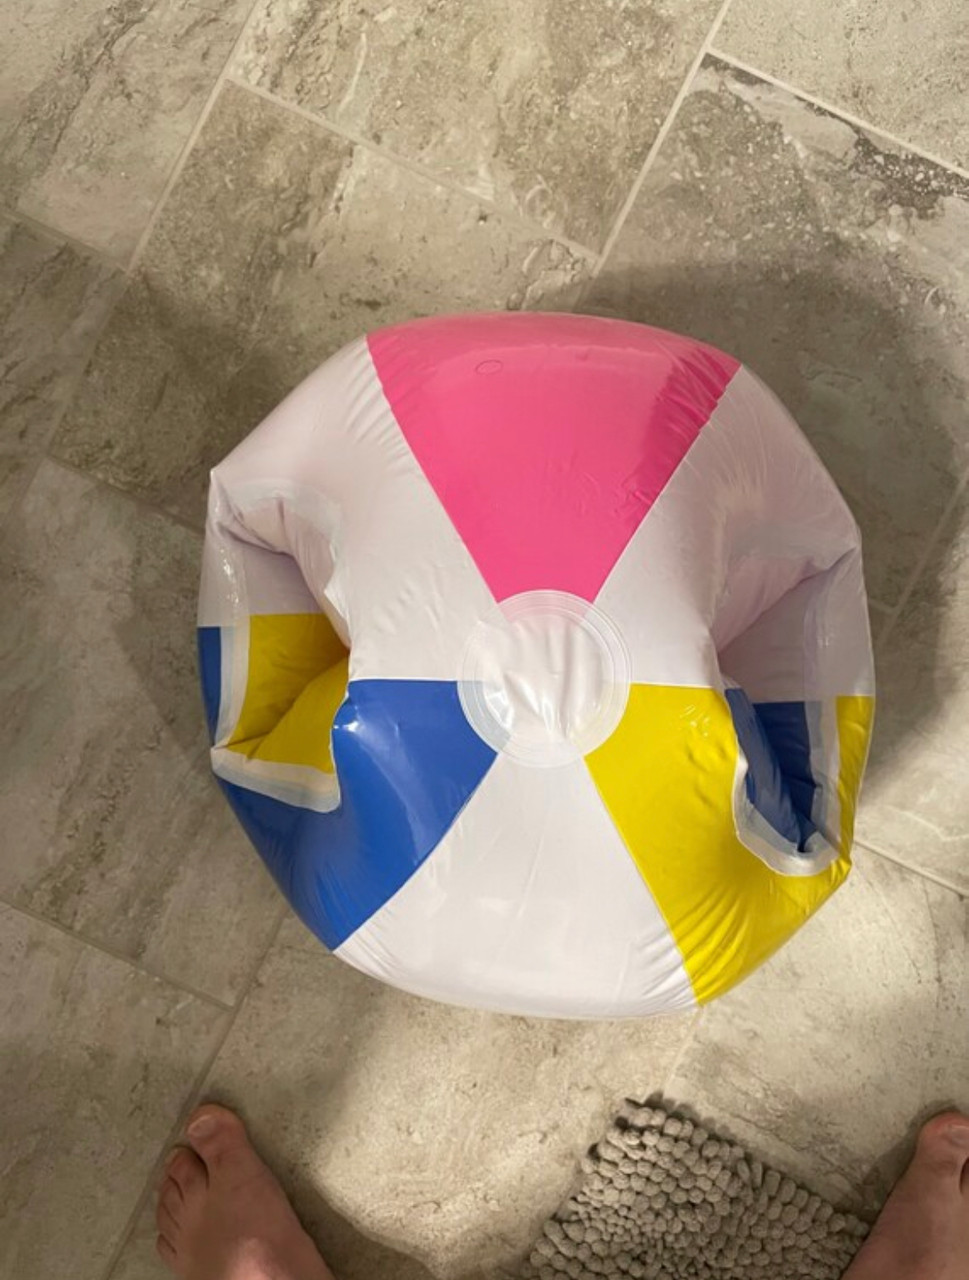 Intex Multicolored Vinyl Inflatable Glossy Panel Beach Ball